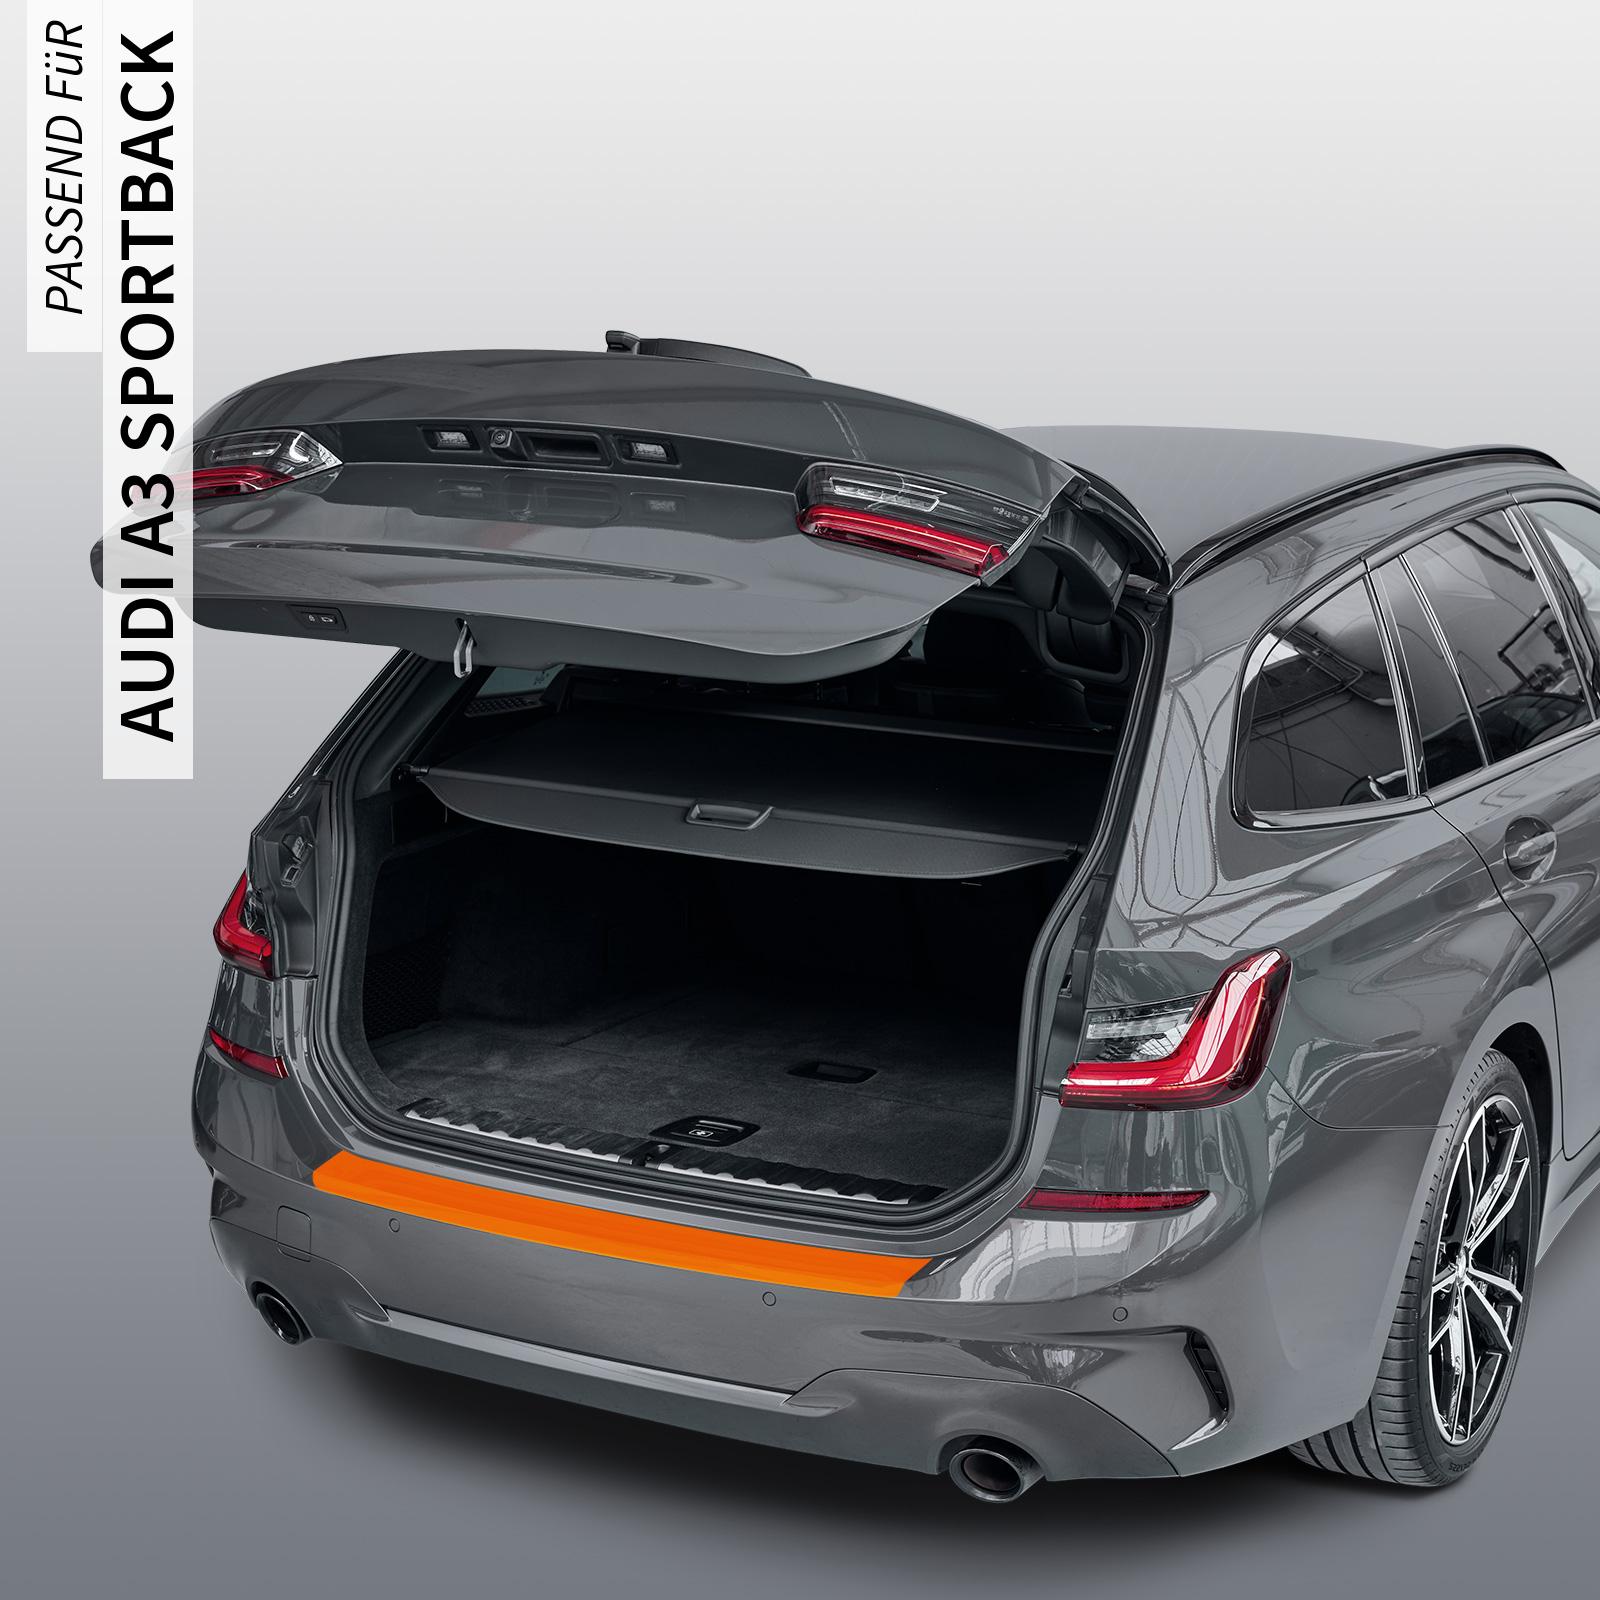 Ladekantenschutzfolie - Transparent Glatt MATT 110 µm stark  für Audi A3 Sportback Typ 8V, BJ 02/2013-2020